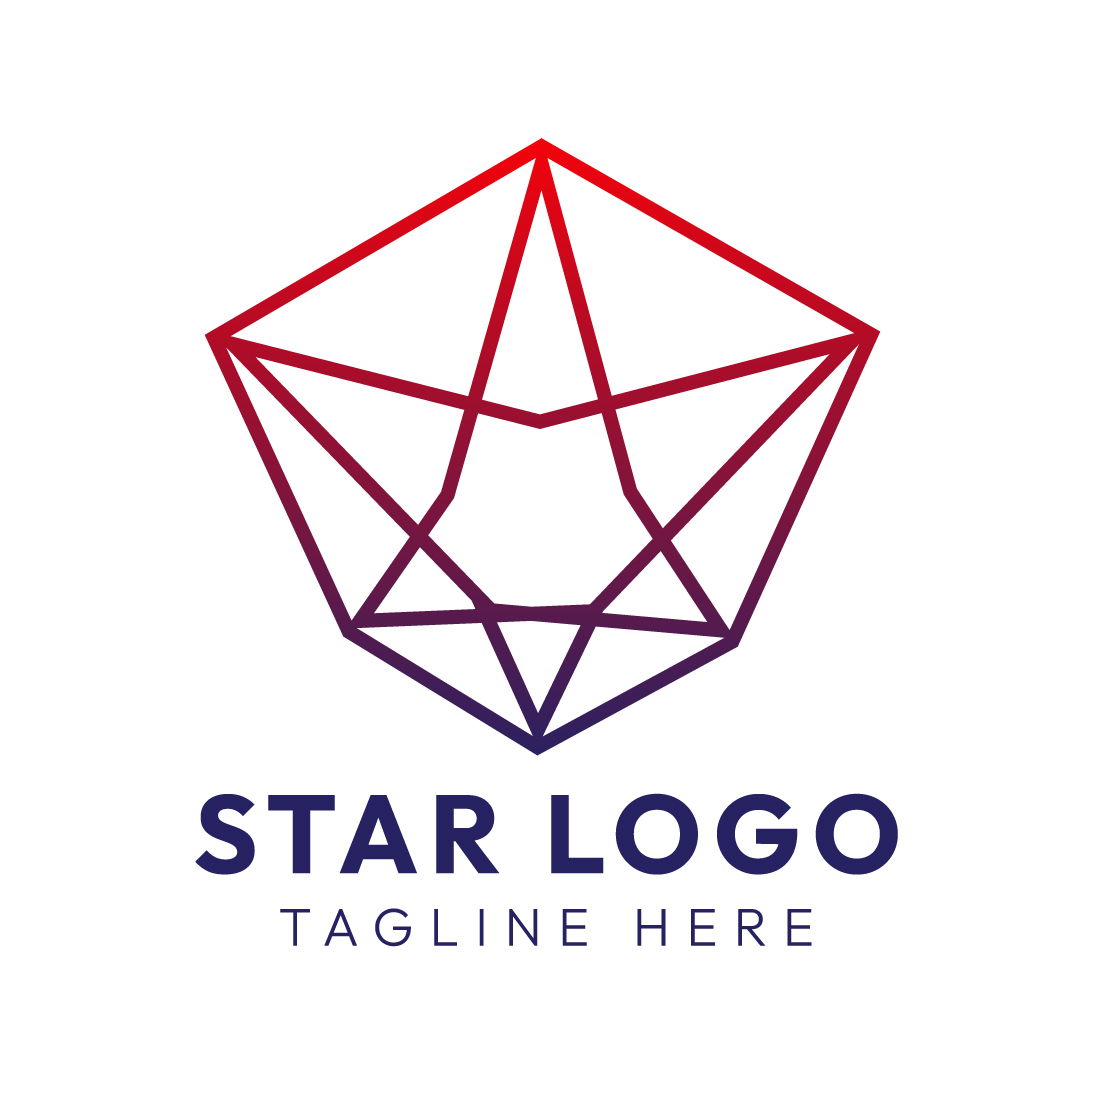 Minimalist Star Logo Design Bundle - Perfect for Modern Brands cover image.